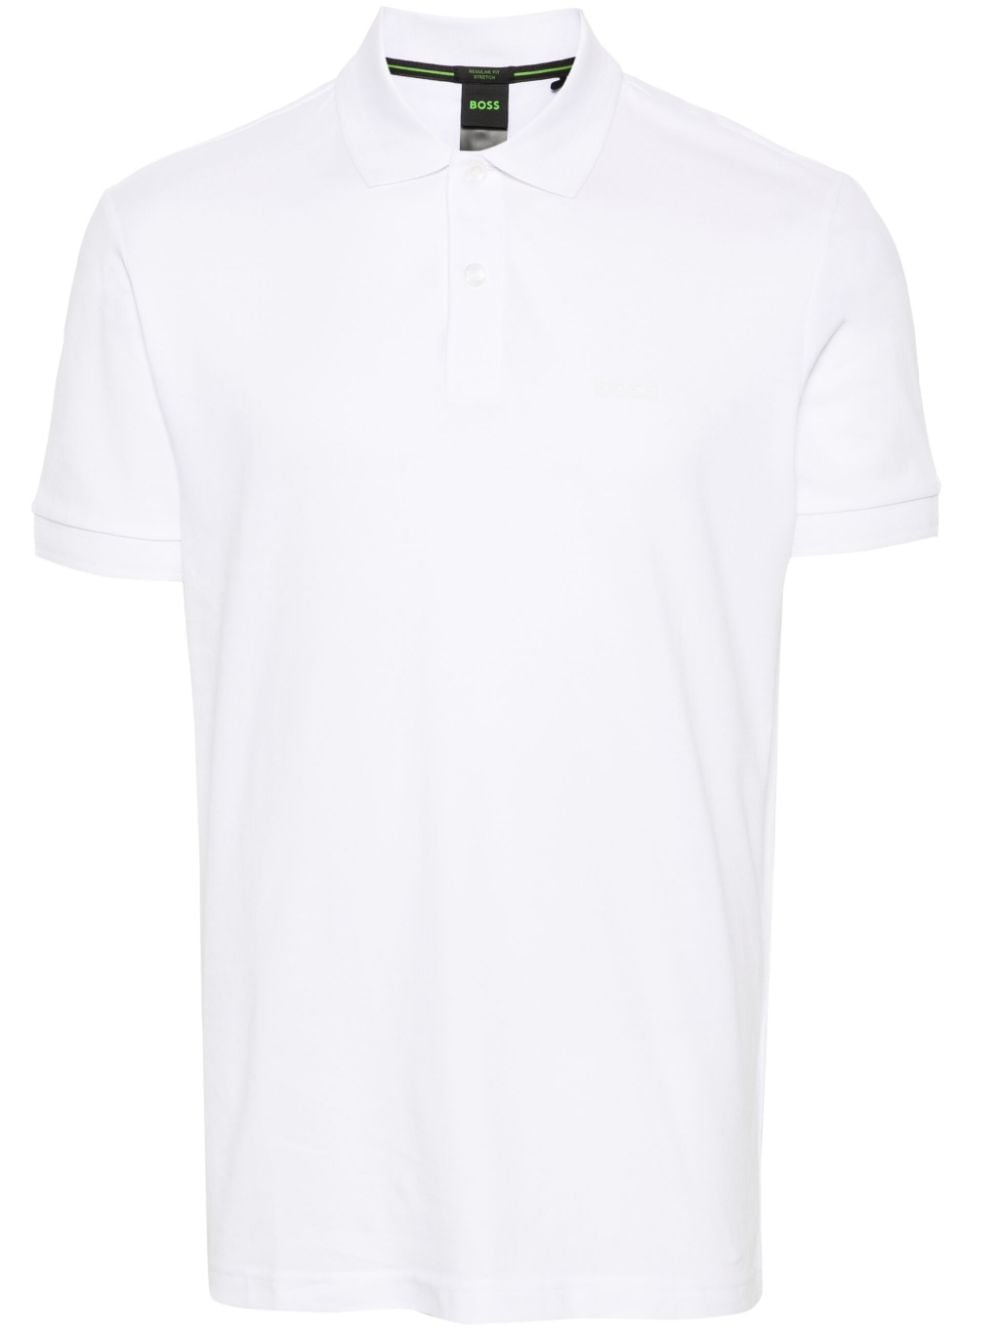 Image 1 of BOSS logo print cotton polo shirt